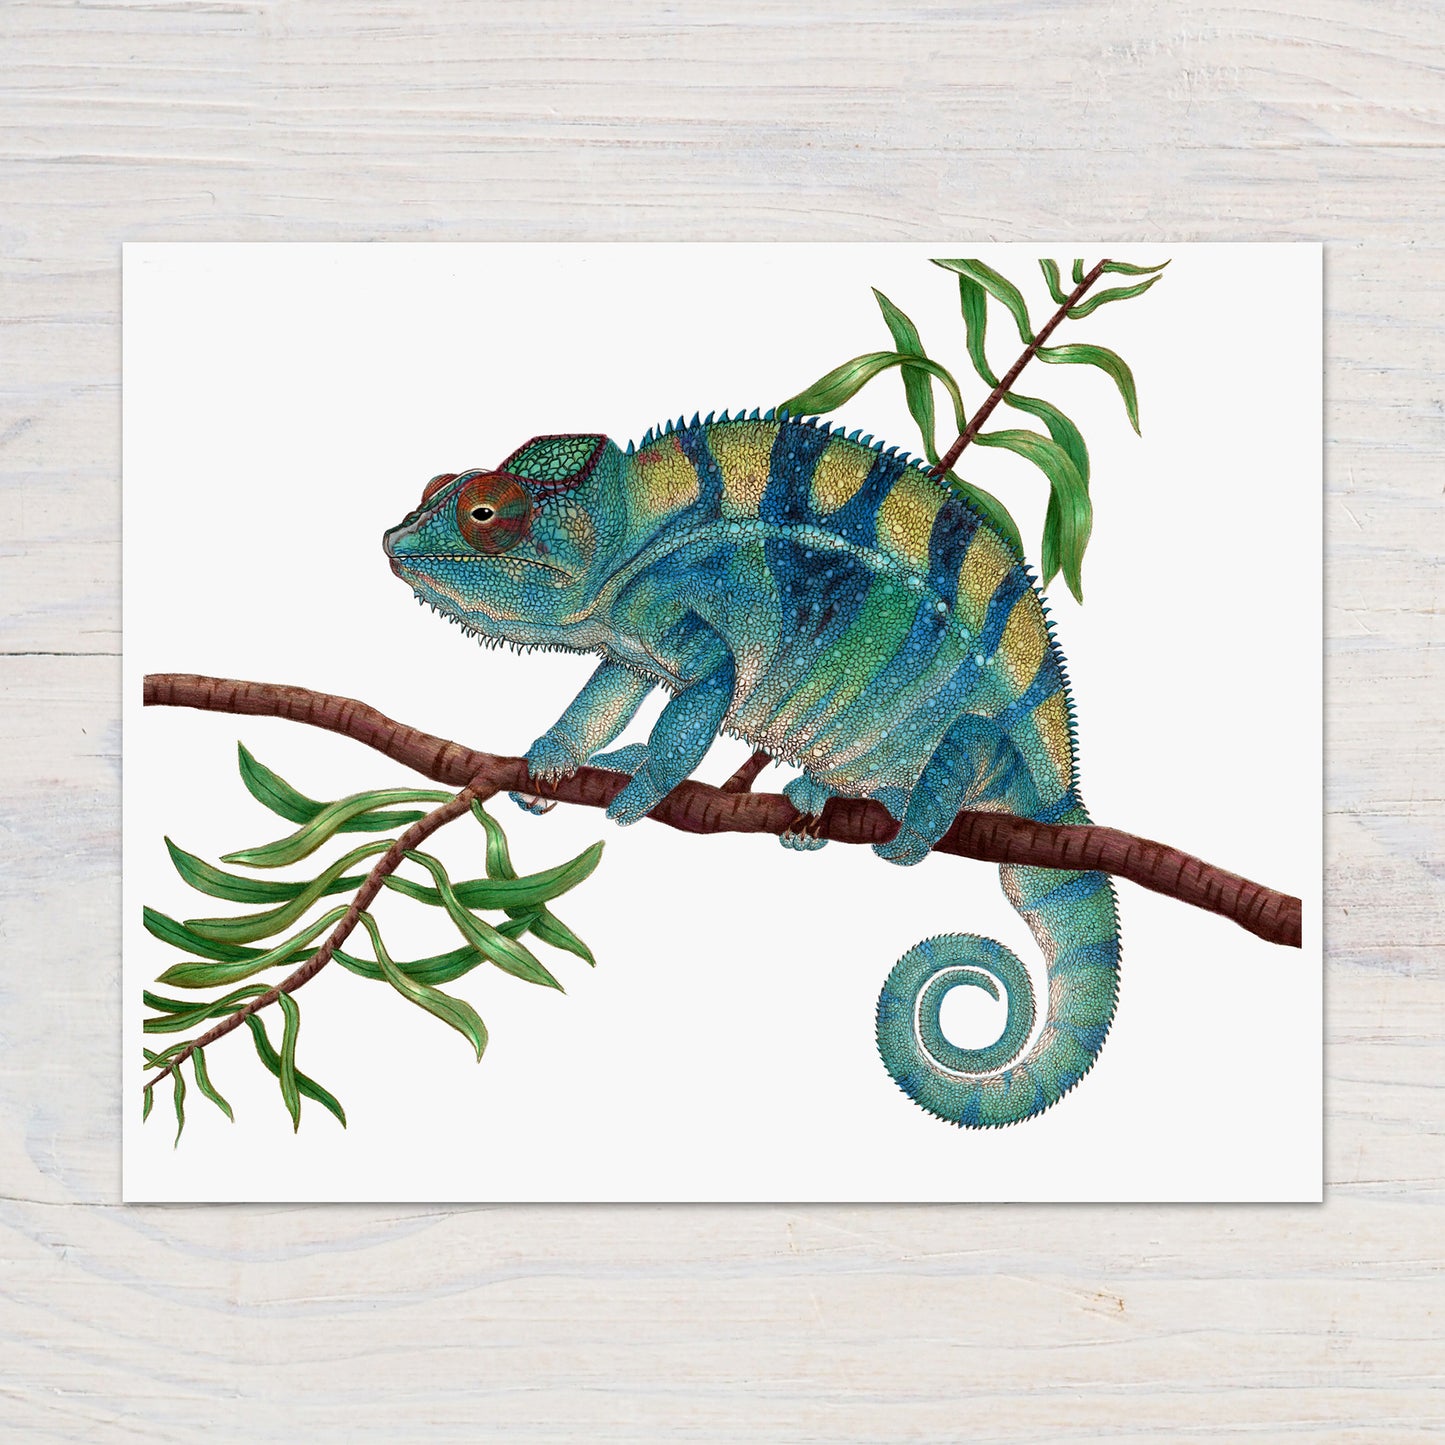 Panther Chameleon Print